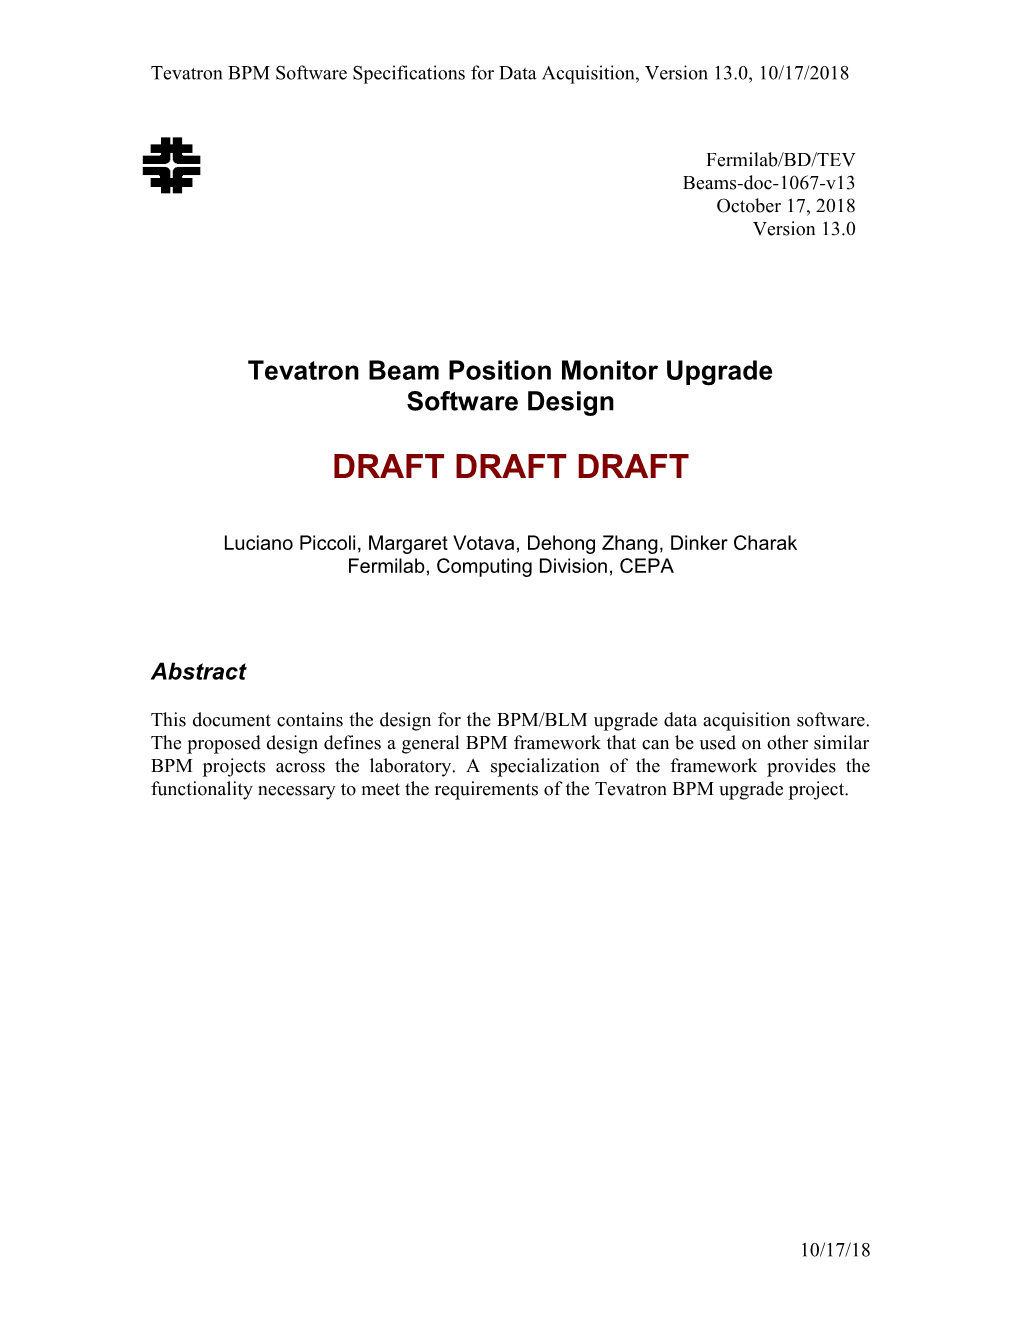 Tevatron BPM Software Design for Data Acquisition, Version 13.0, 10/19/2018